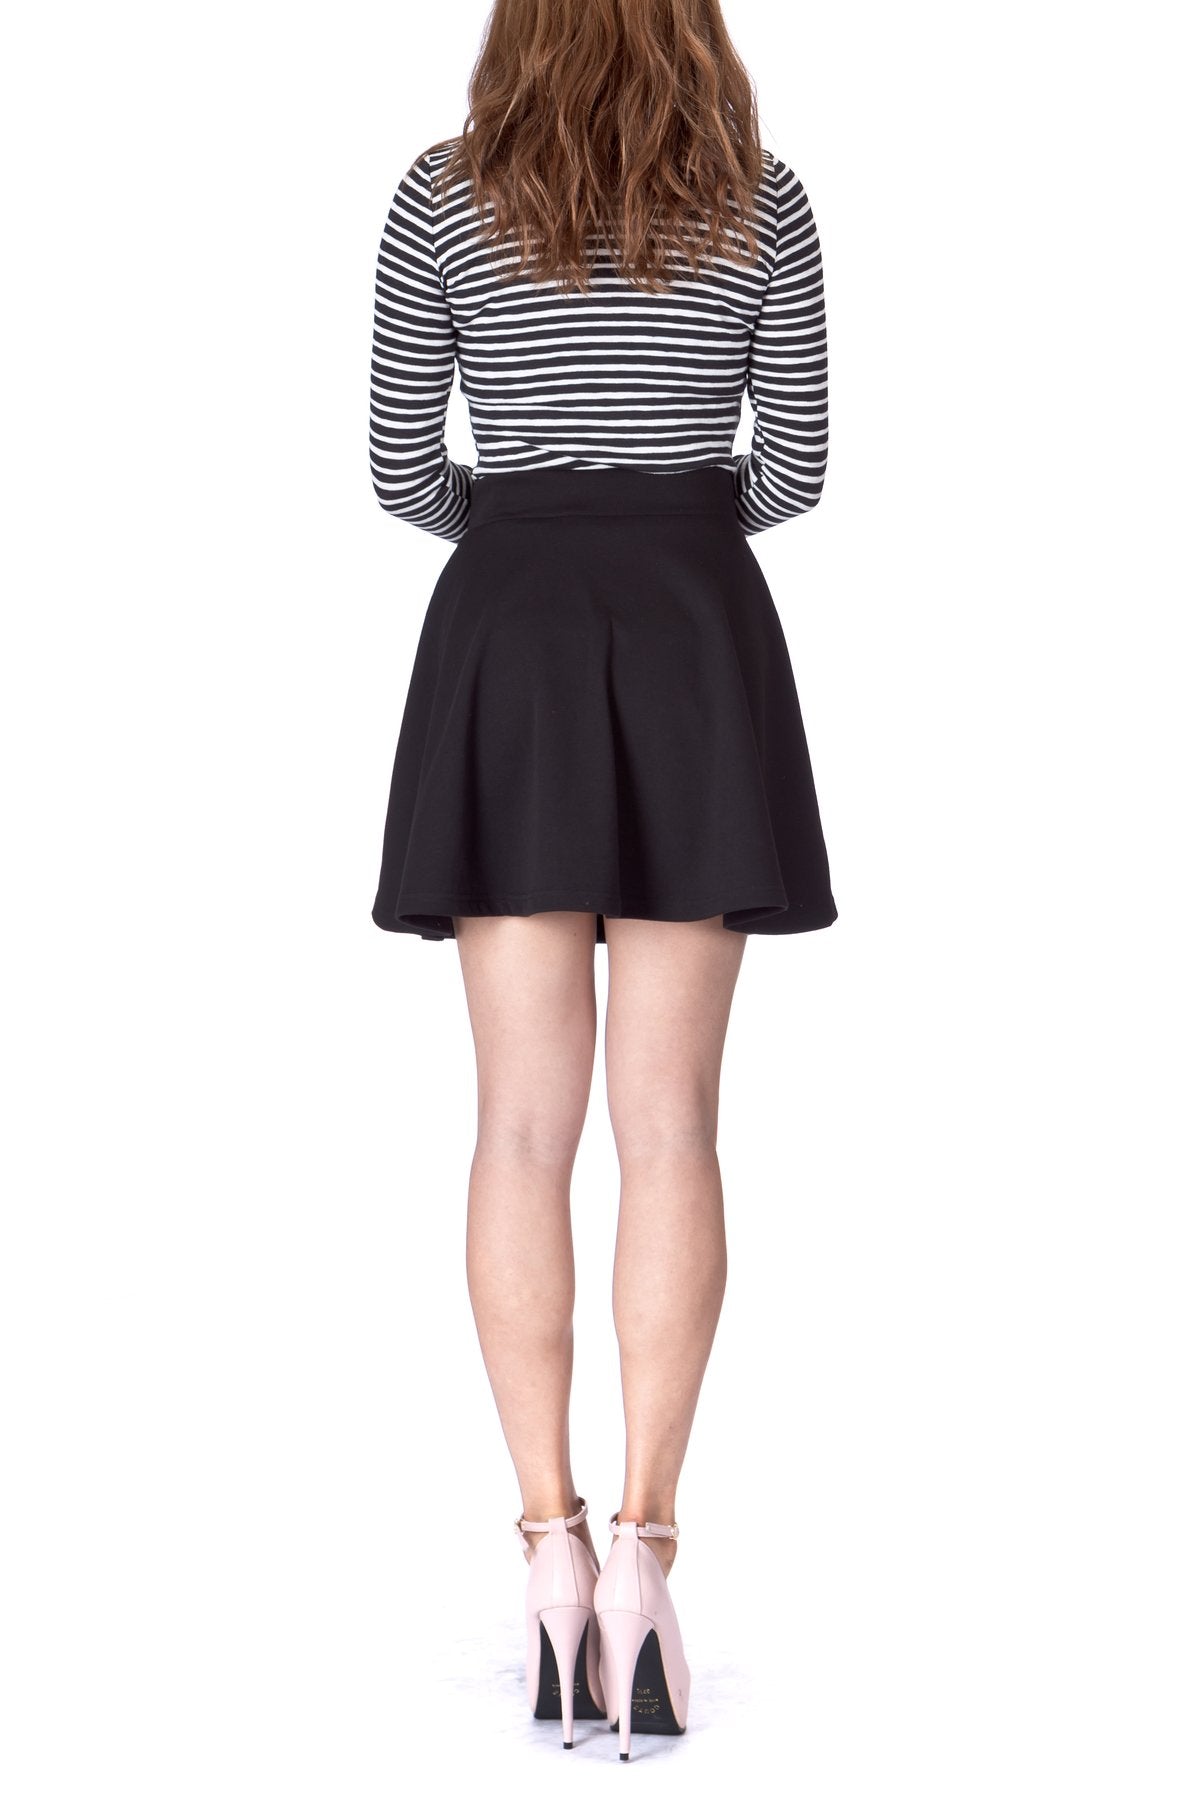 Basic Solid Stretchy Cotton High Waist A line Flared Skater Mini Skirt Black 05 1